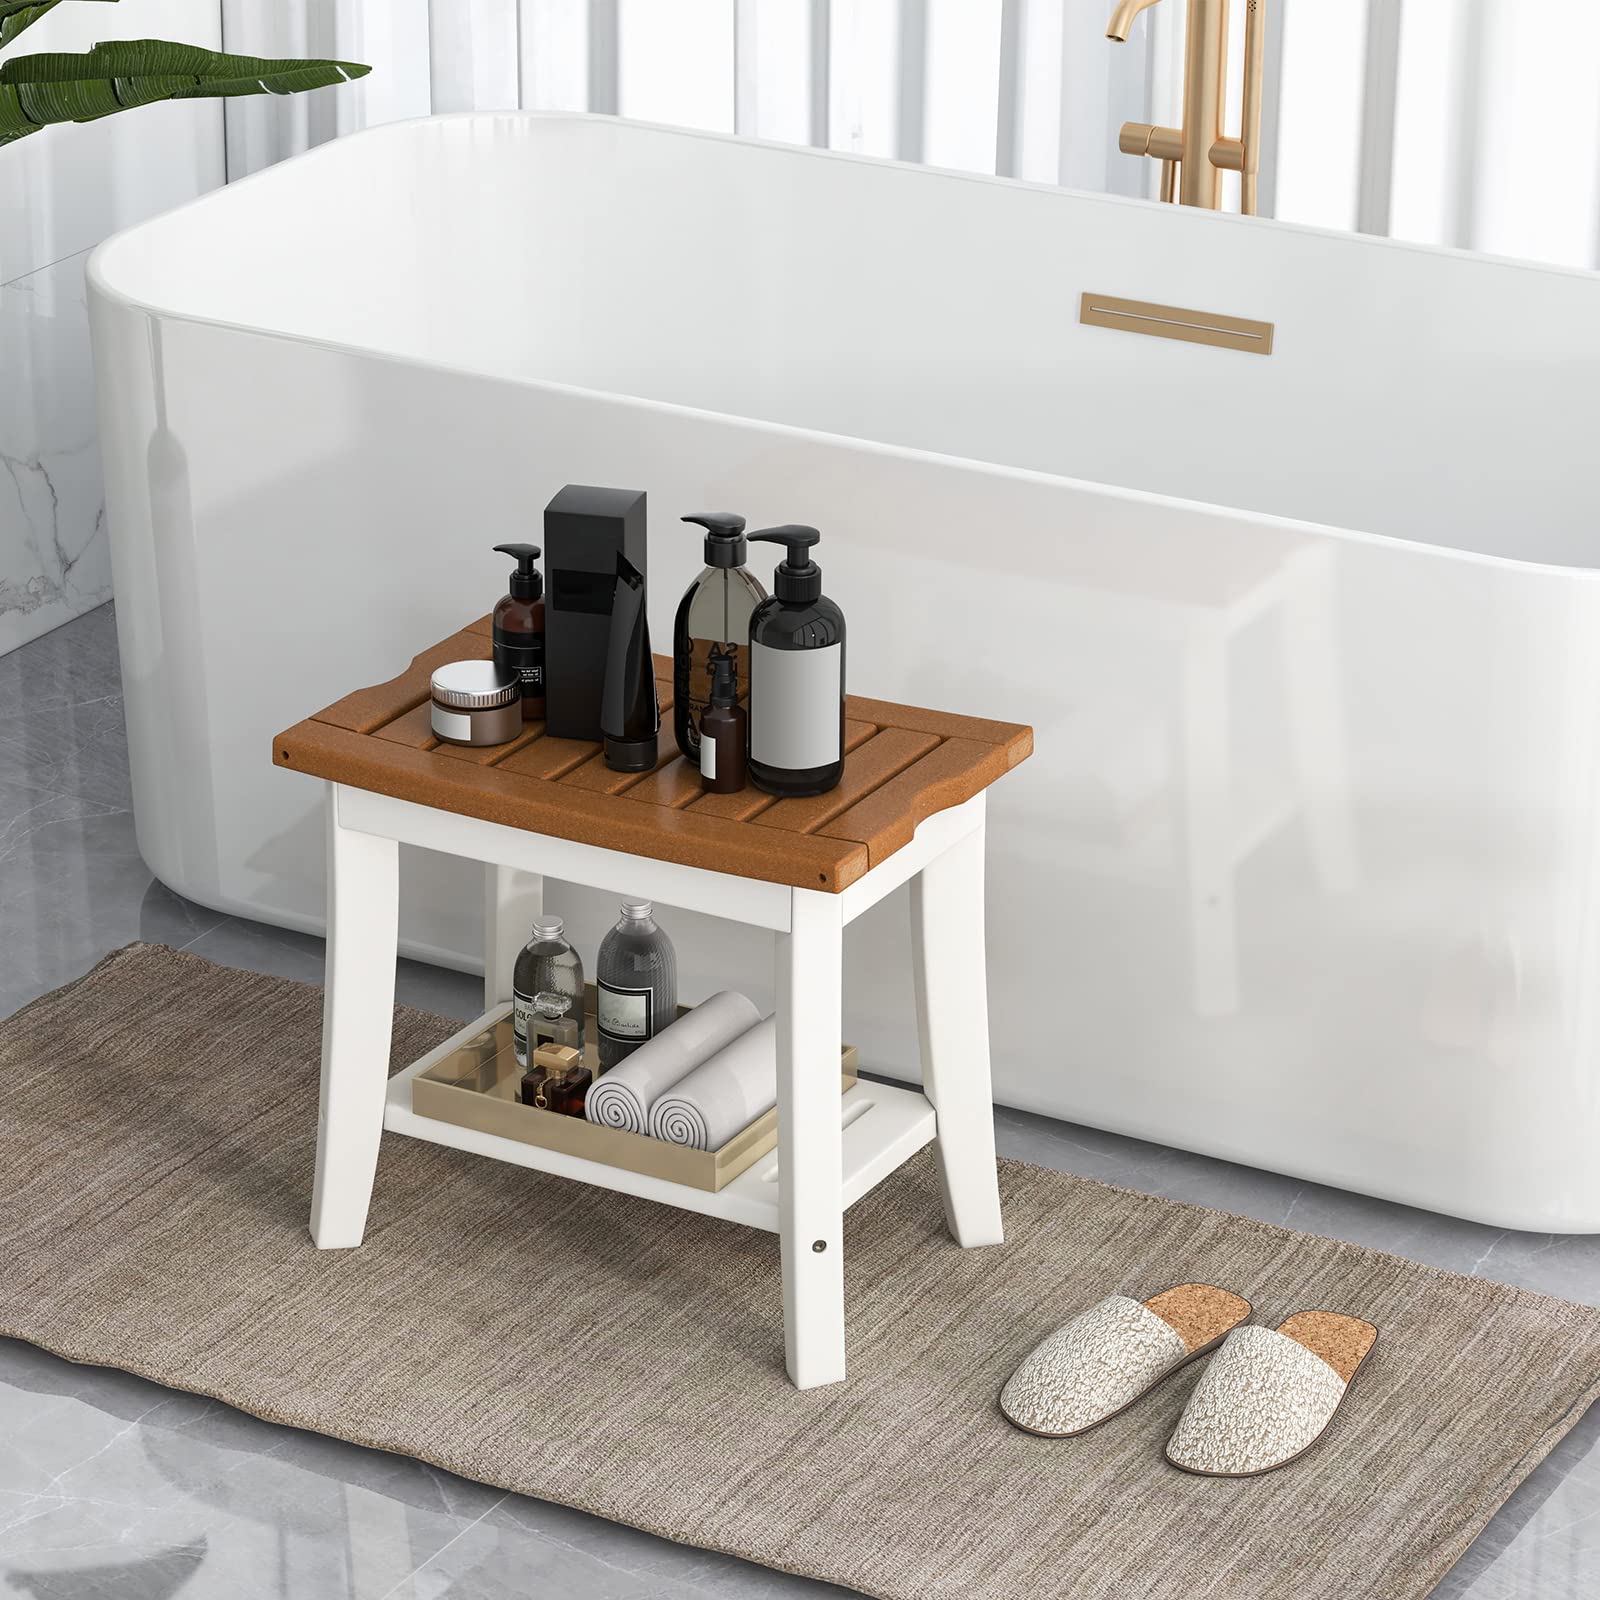 Giantex Shower Bench HDPE Waterproof - Bath Spa Seat with Storage Shelf, Non-Slip Rubber Foot Pads